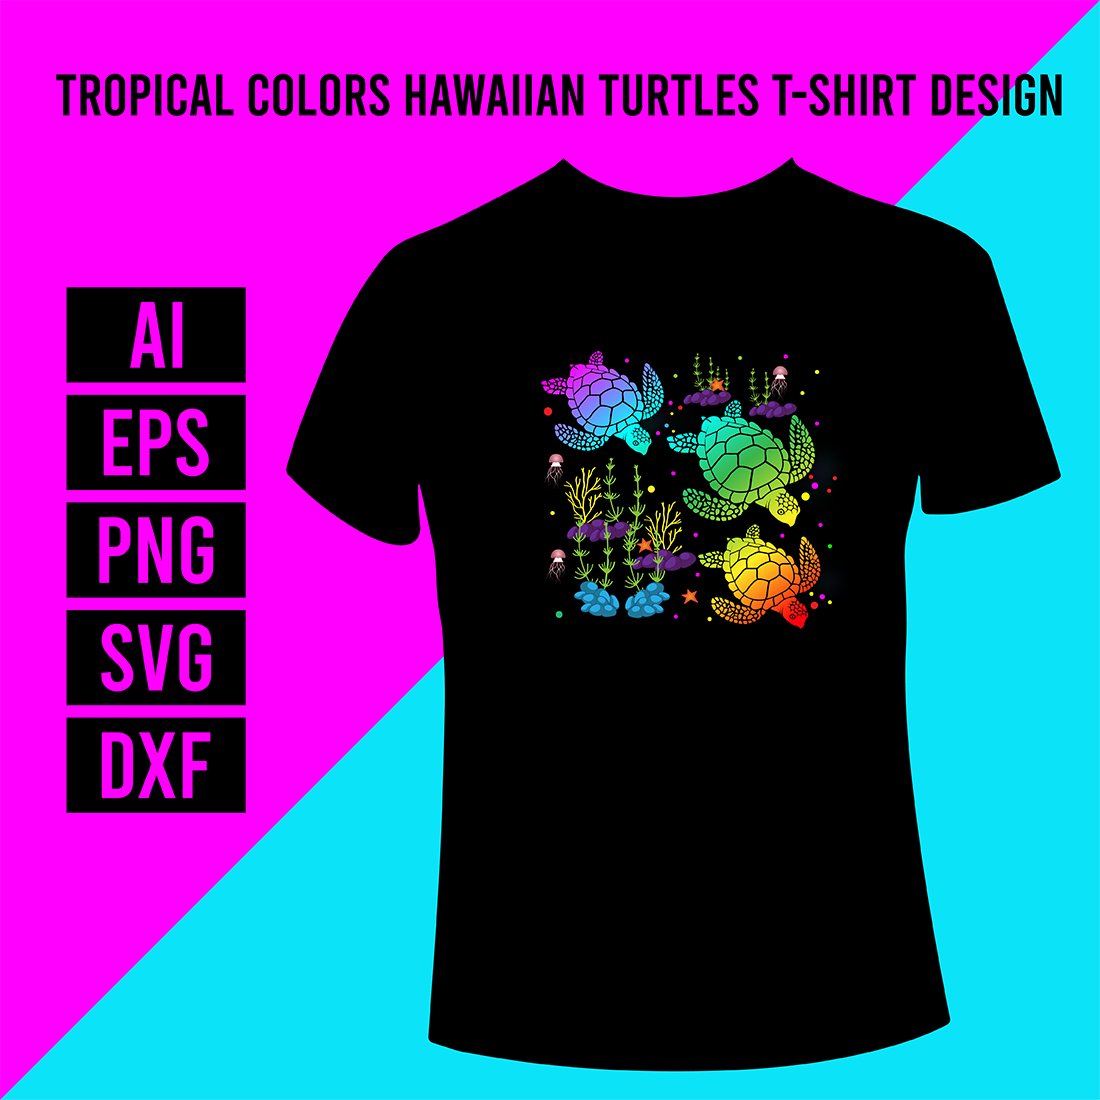 Tropical Colors Hawaiian Honu Sea Turtles T-Shirt Design cover image.